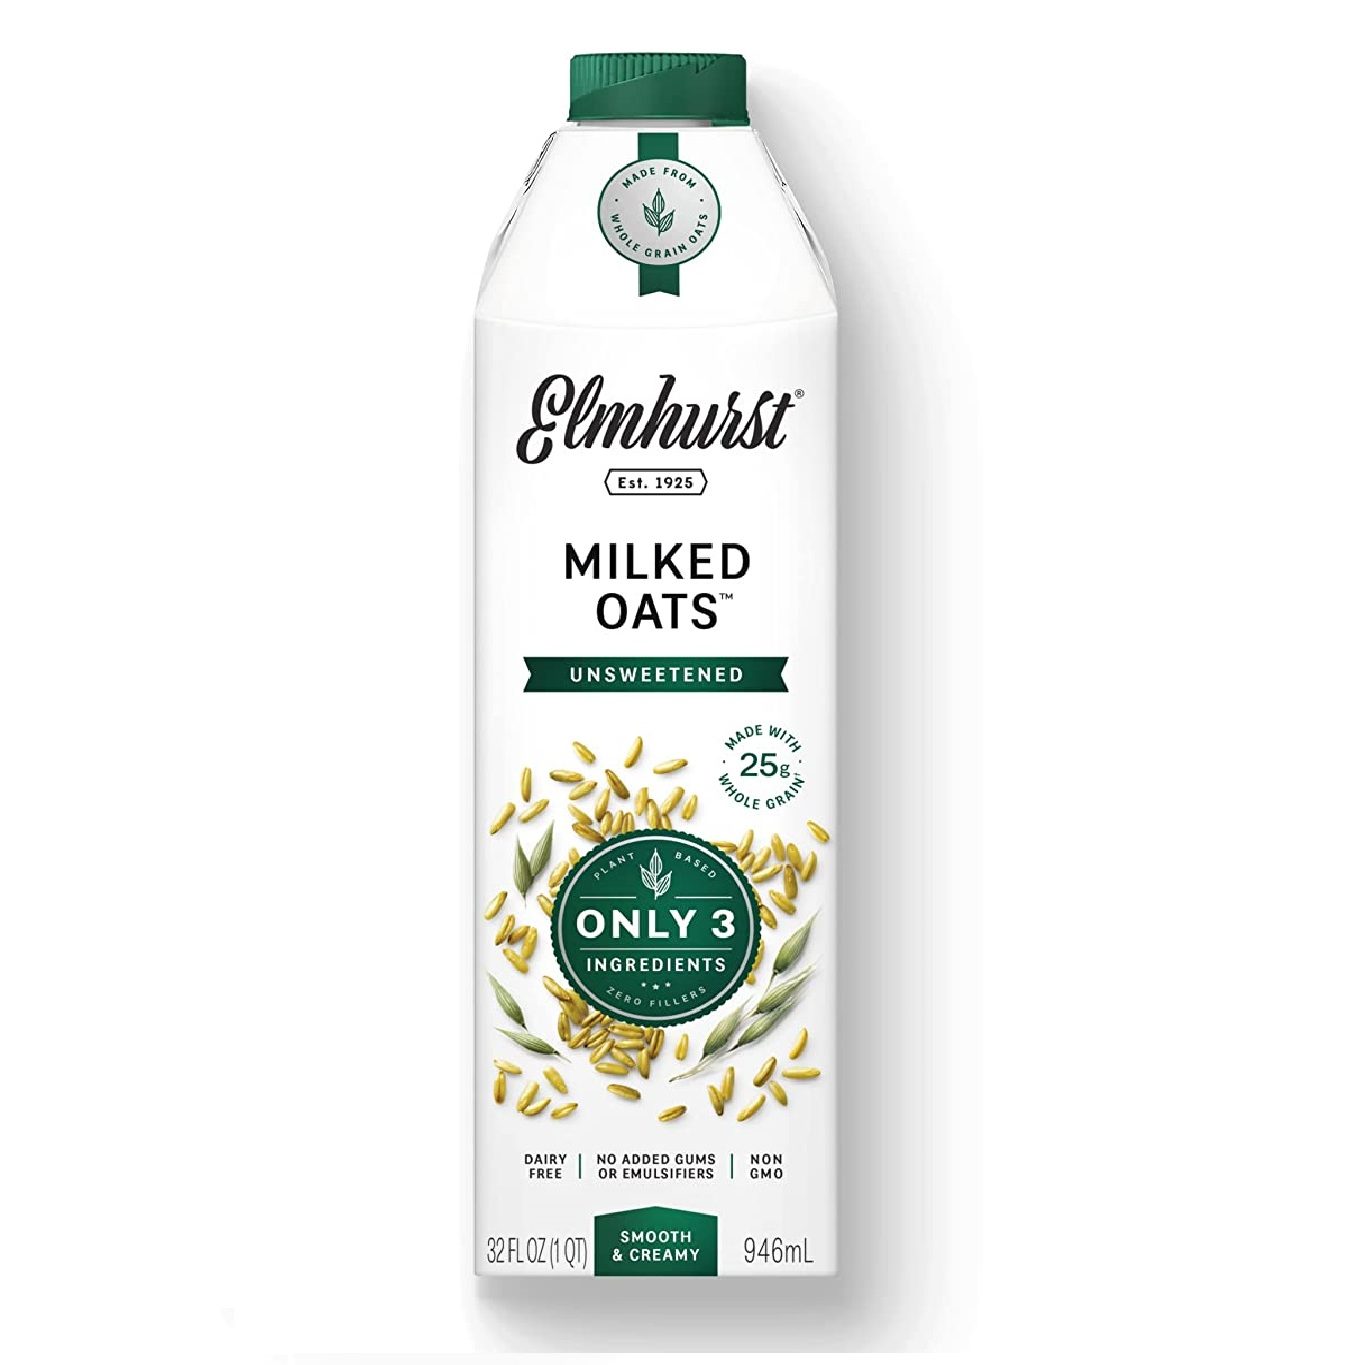 Elmhurst 1925 Milked Oats Unsweetened Oat Milk, 32 Ounce (Pack of 6)